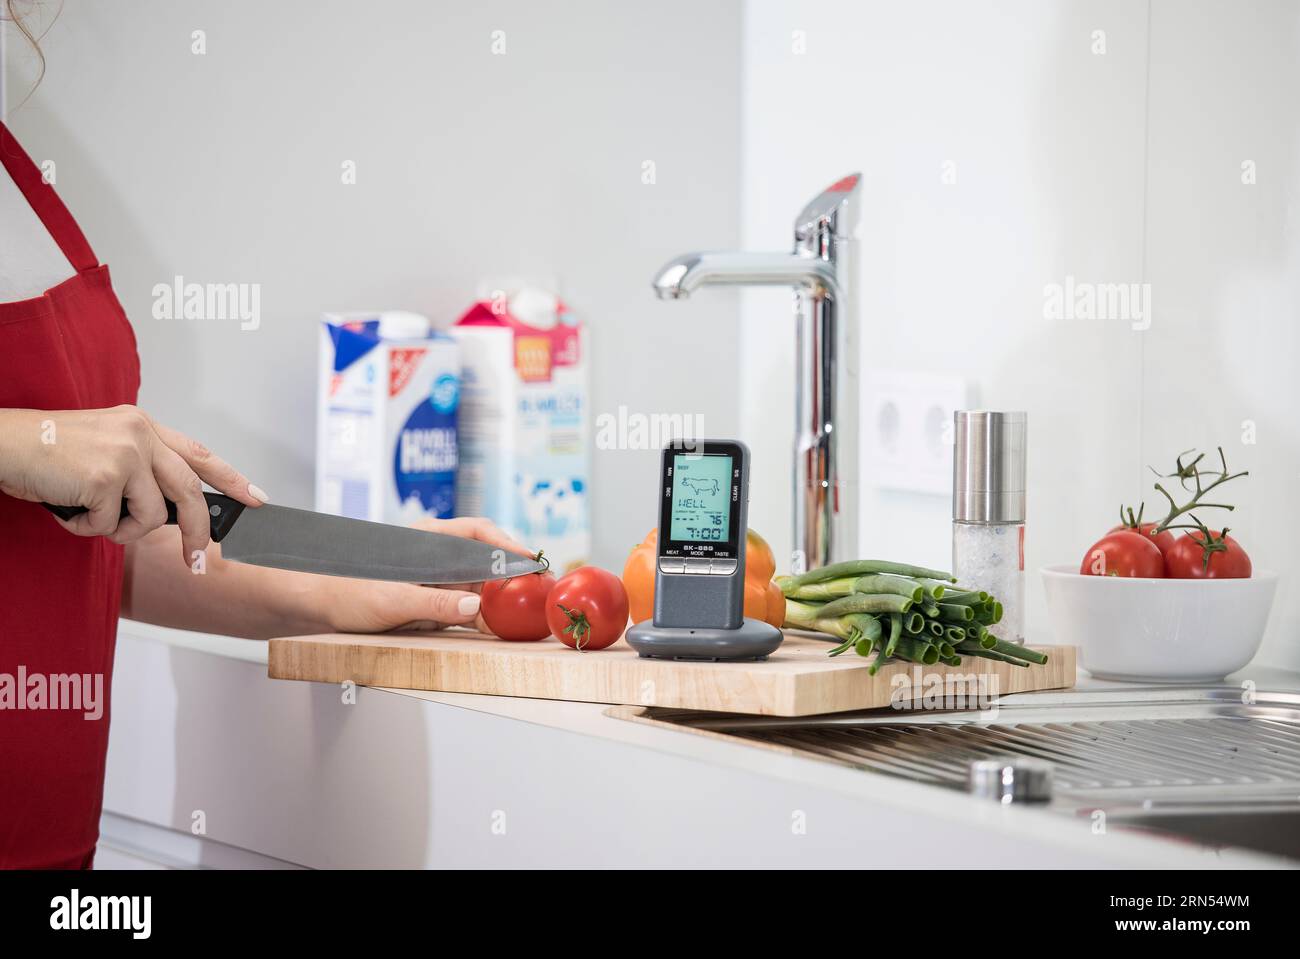 Repeater im/im Freien für digitales Grillthermometer, Grill, Grill in Küche/Kochumgebung Stockfoto